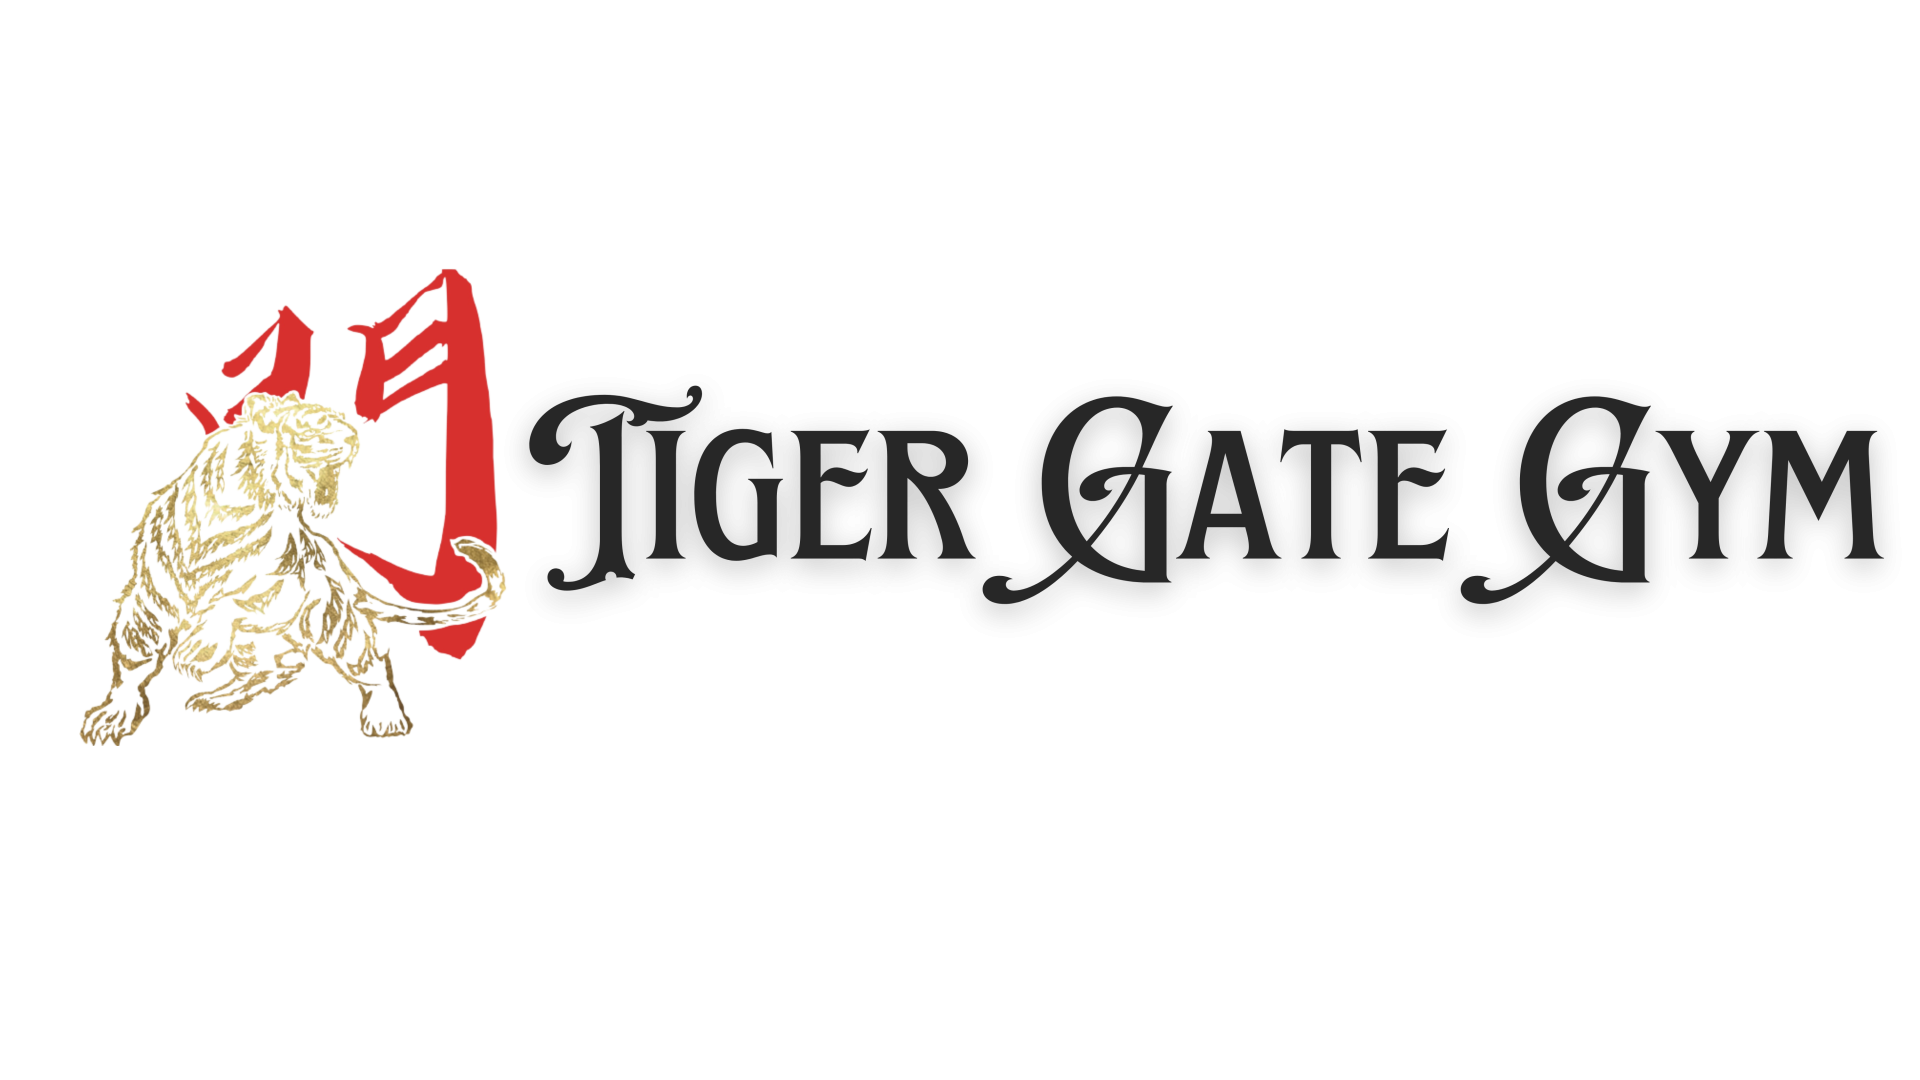 Tiger Gate Gym  photo